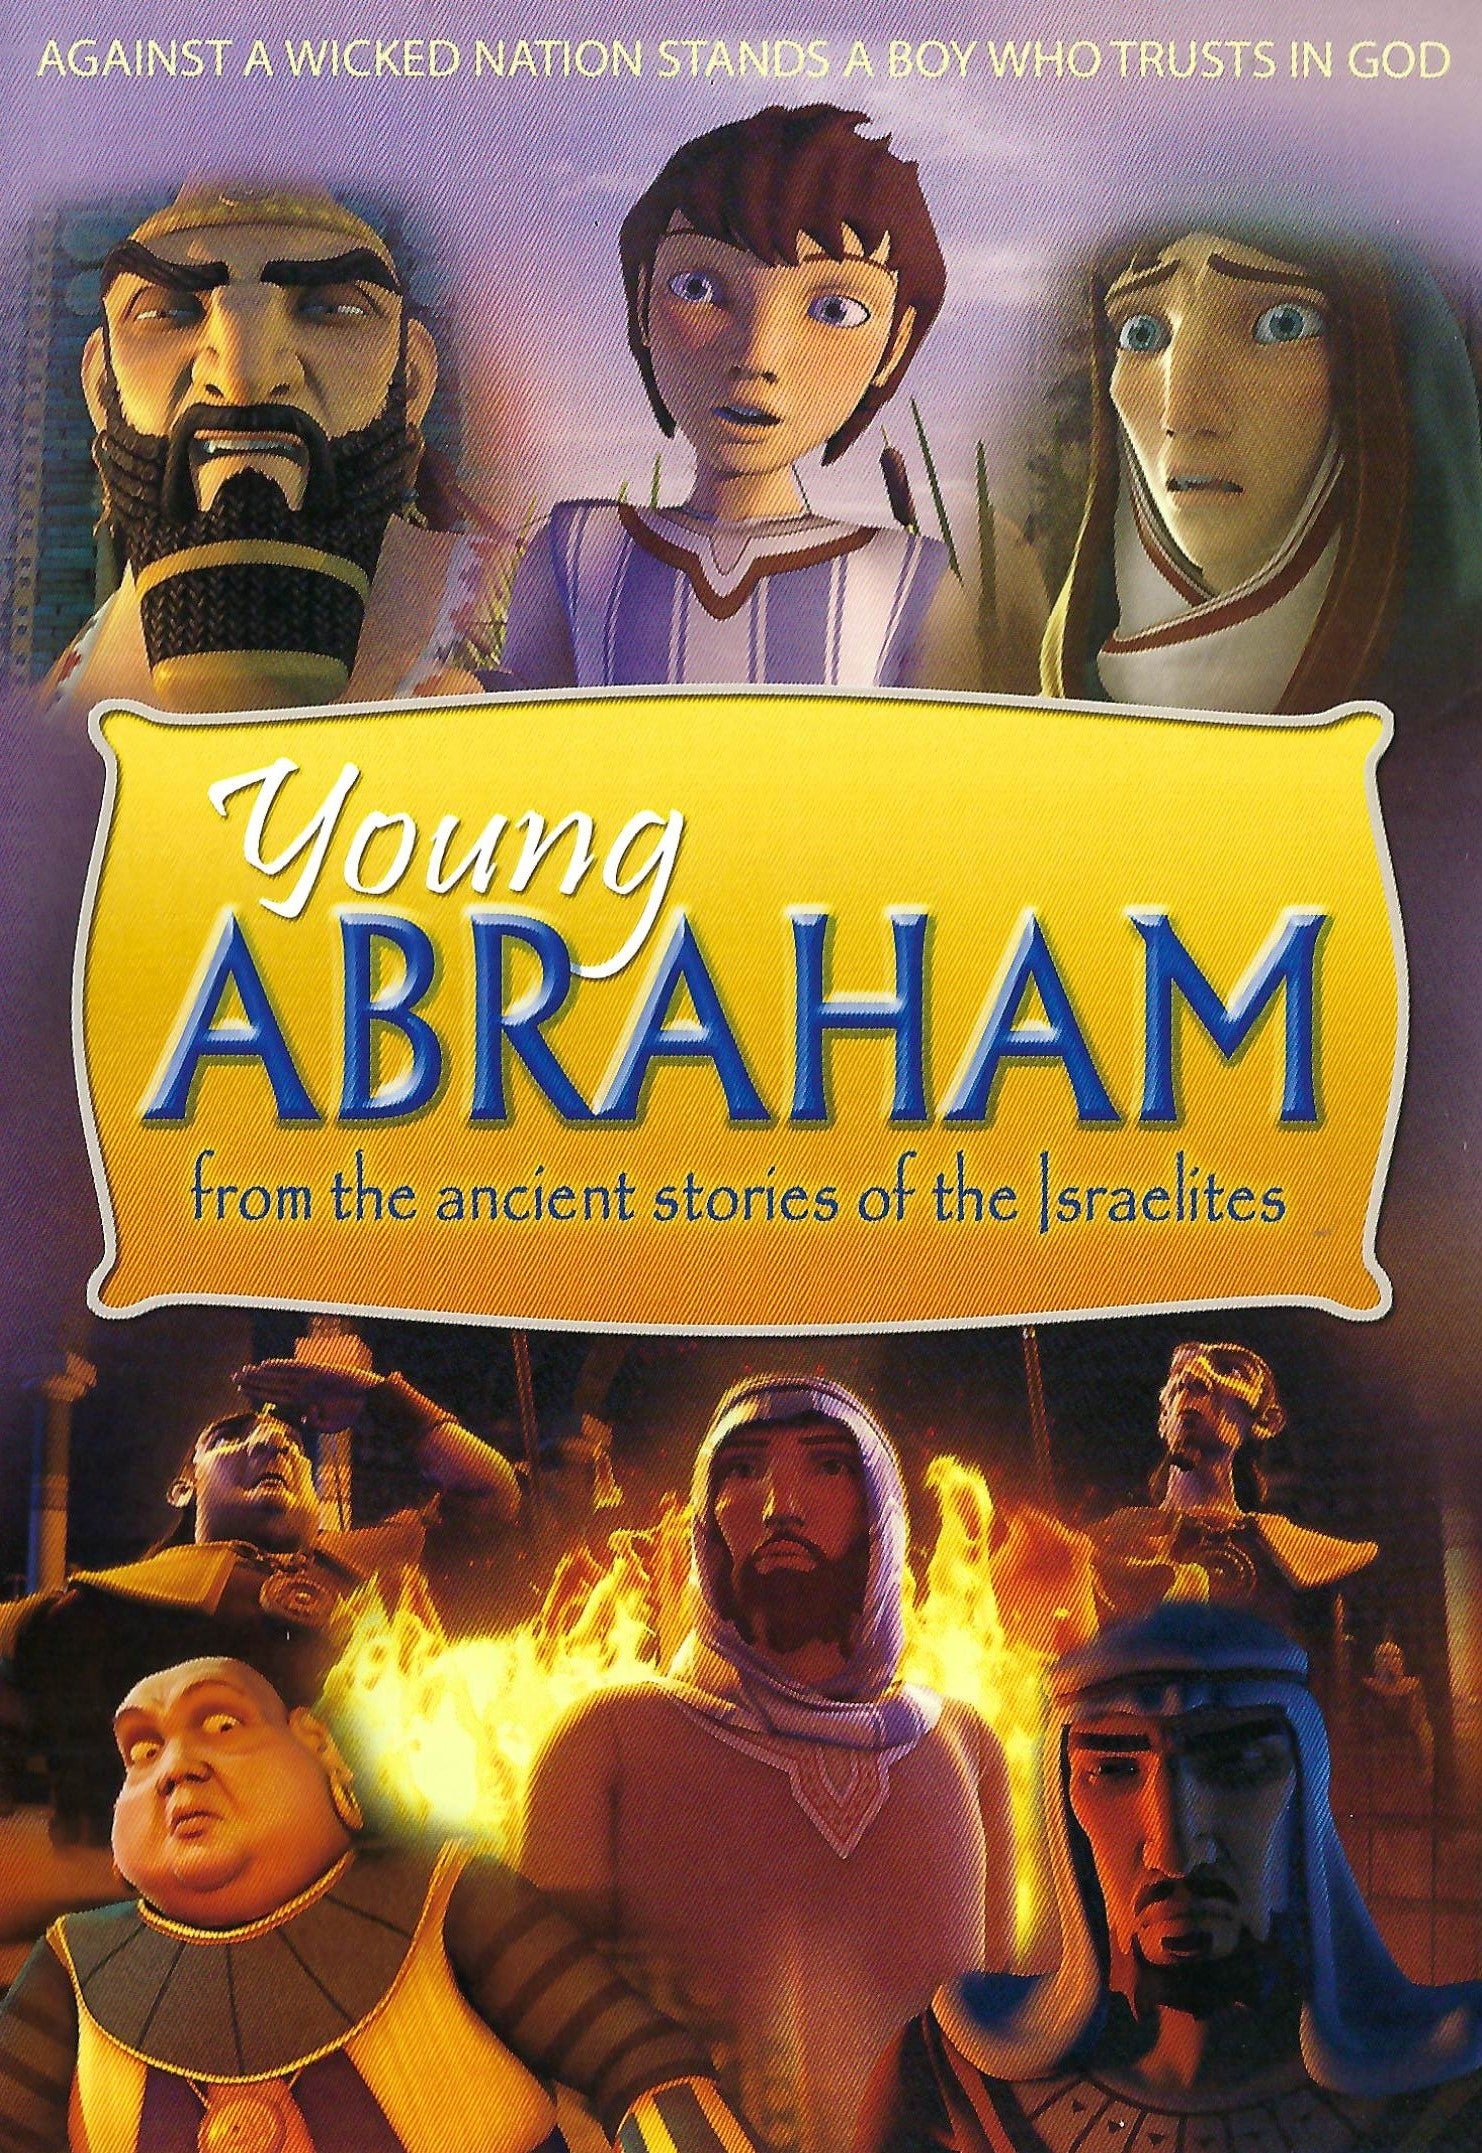 Bible Kids Club - Young Abraham